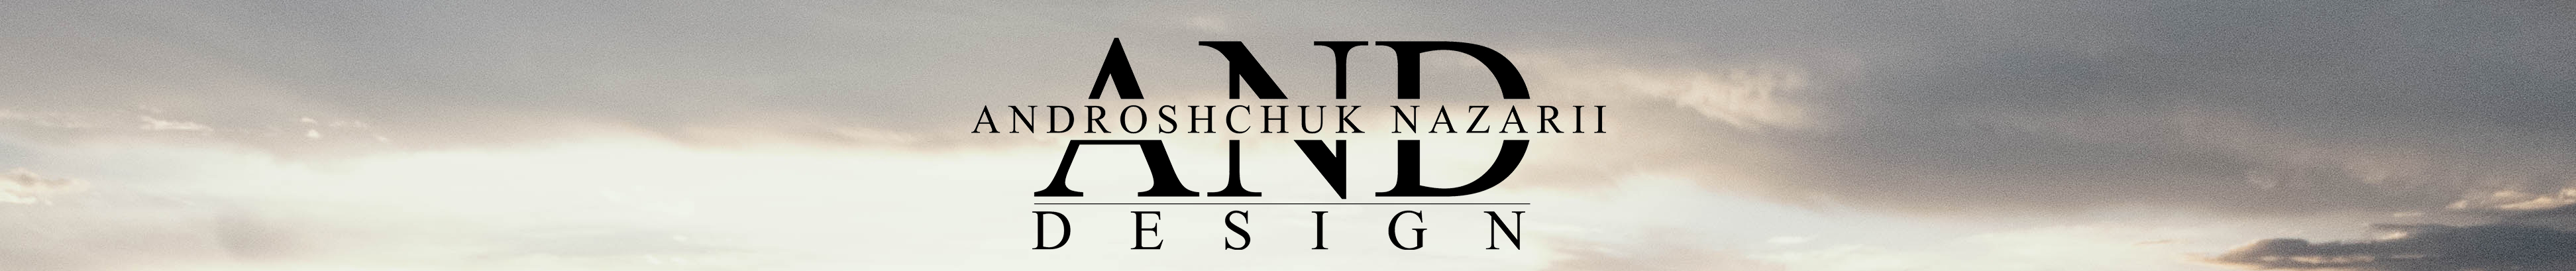 Nazarii Androshchuk's profile banner